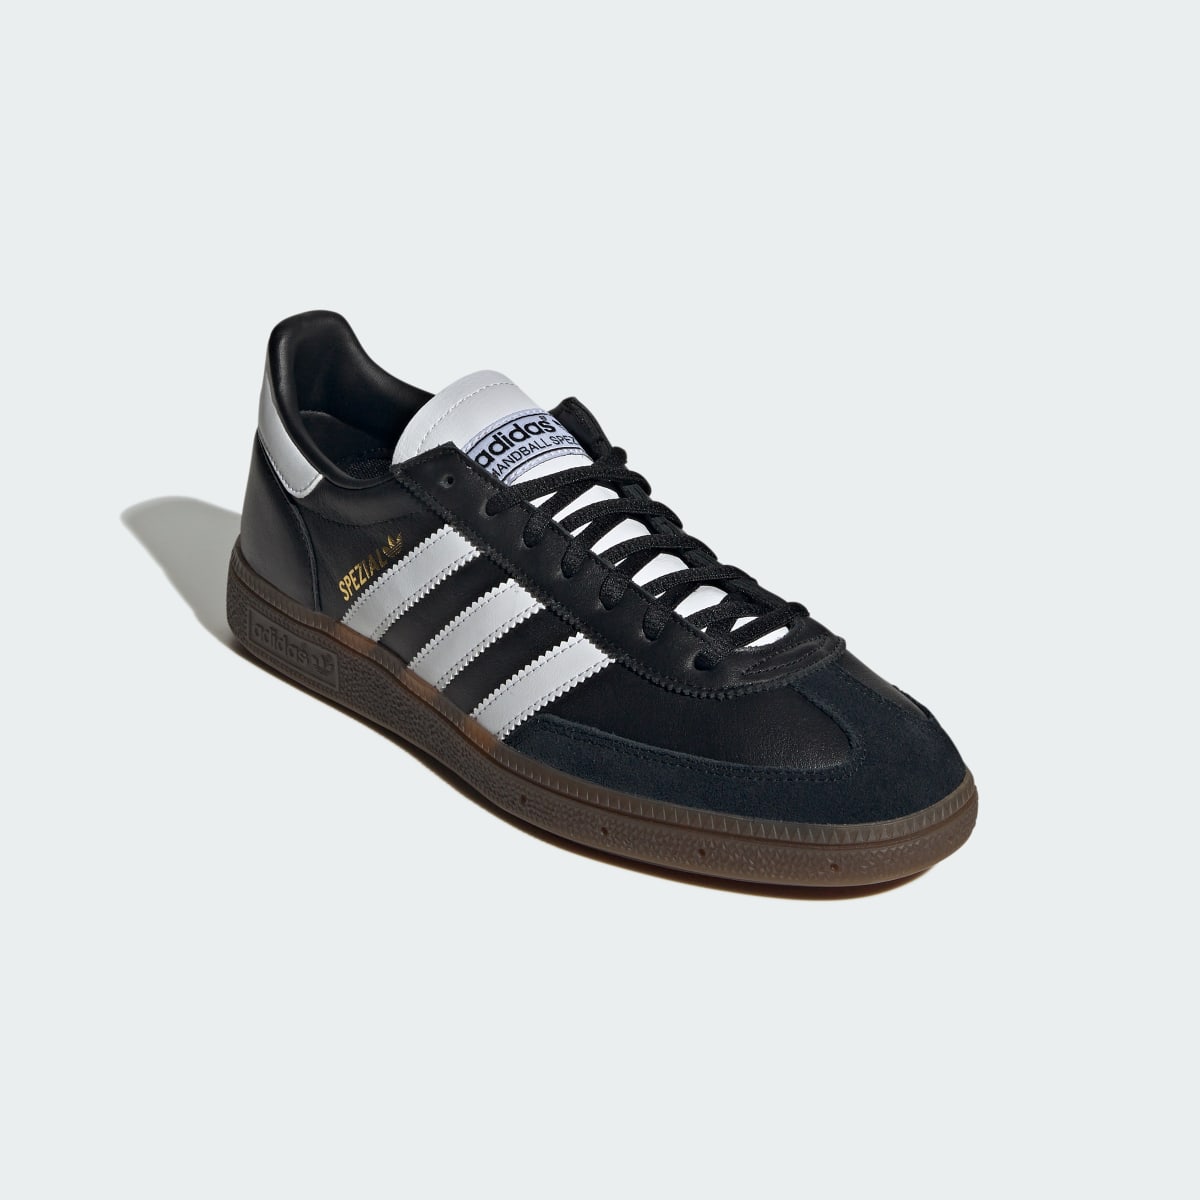 Adidas Handball Spezial Shoes. 5